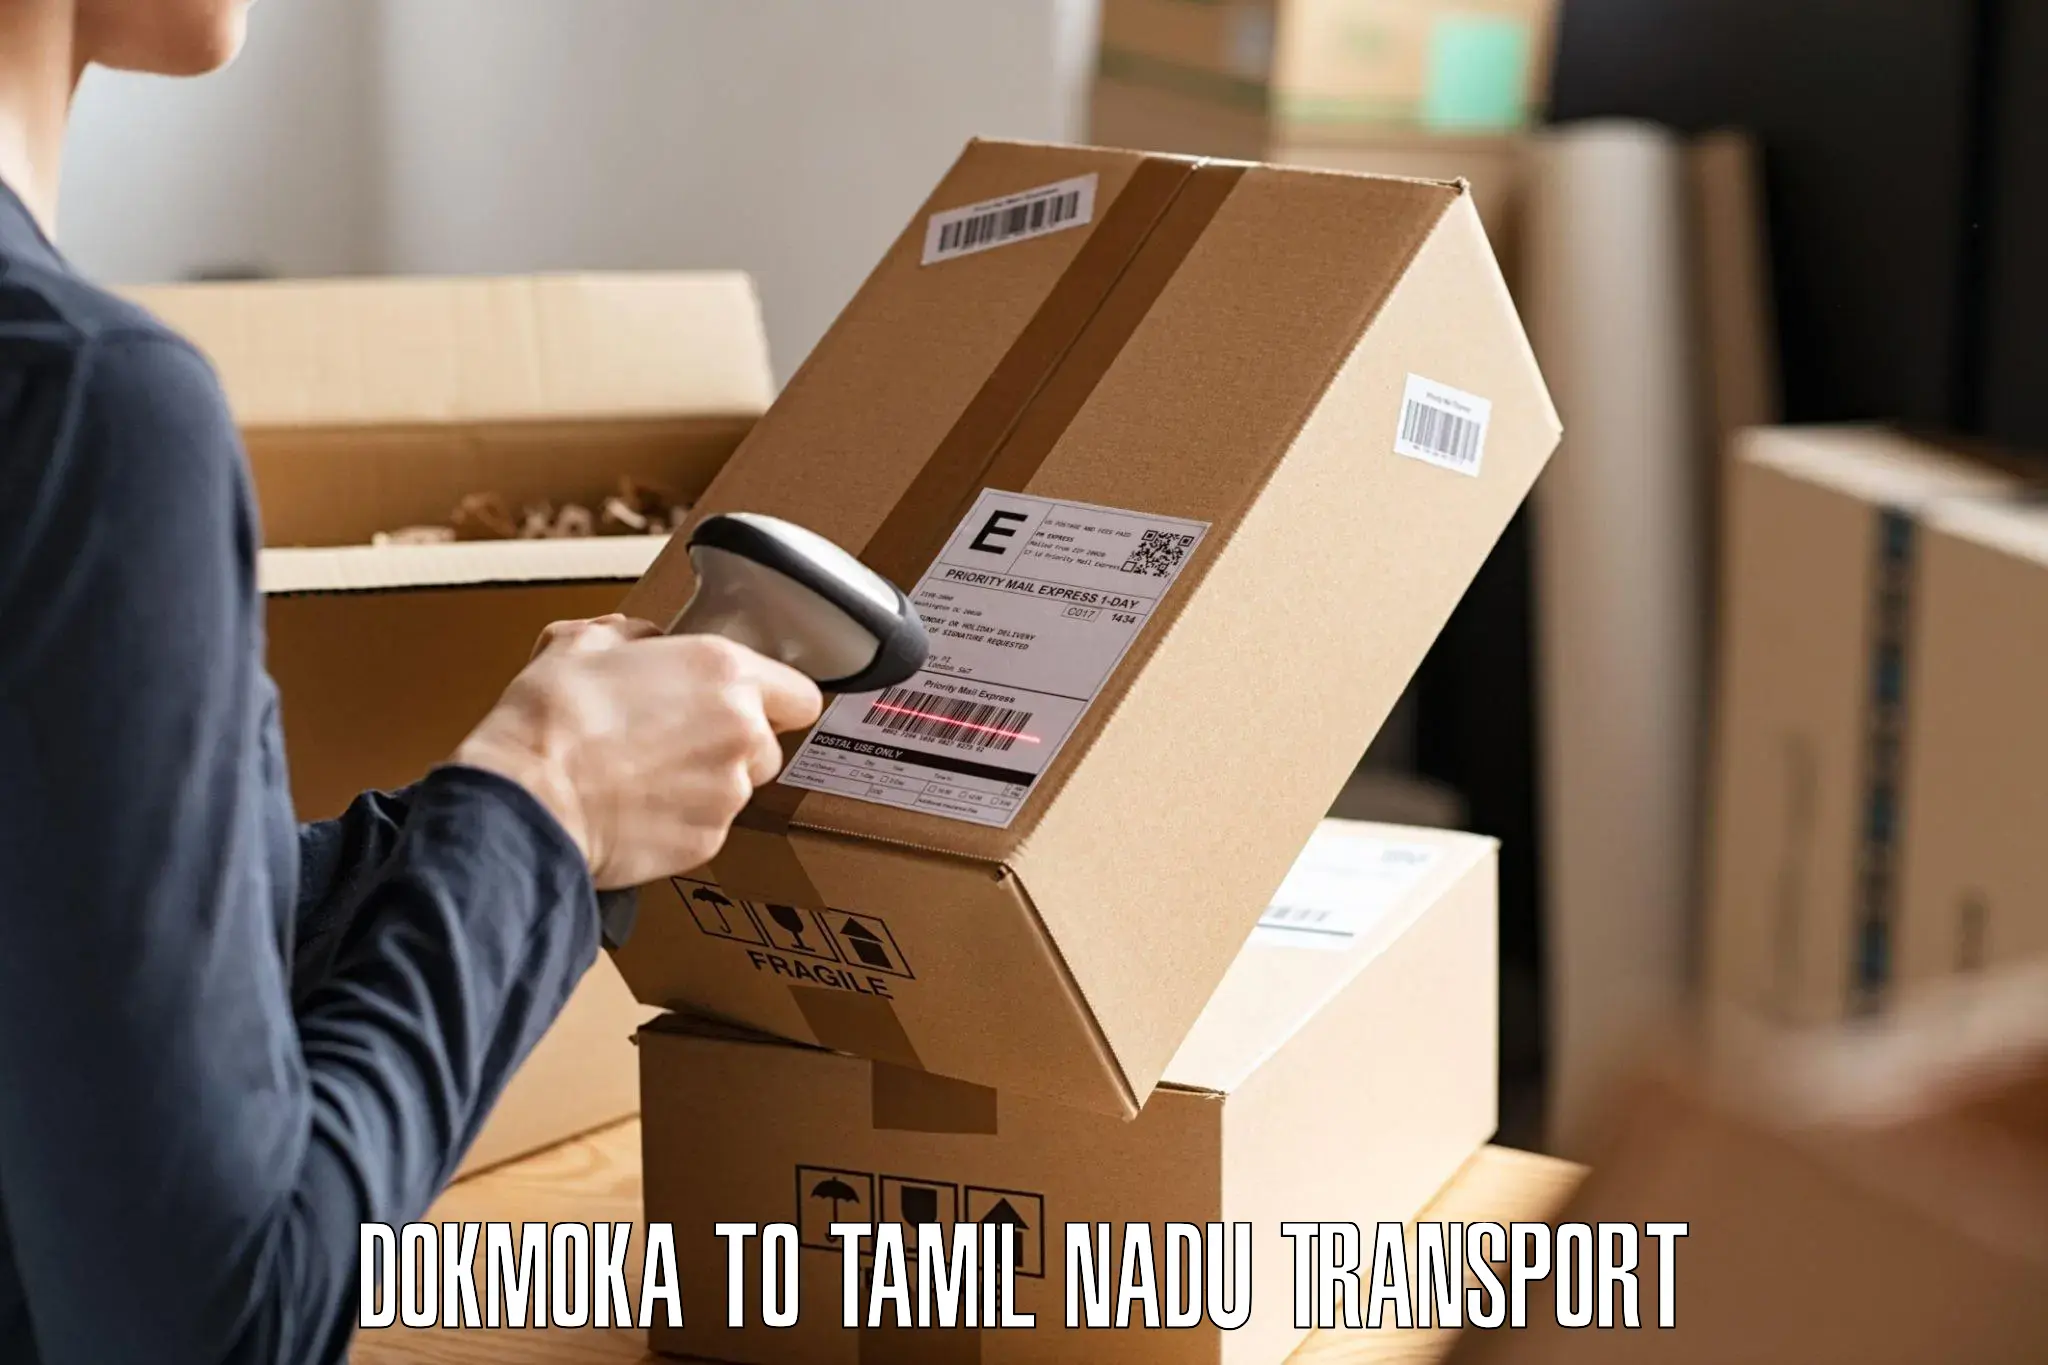 Shipping partner Dokmoka to Manonmaniam Sundaranar University Tirunelveli